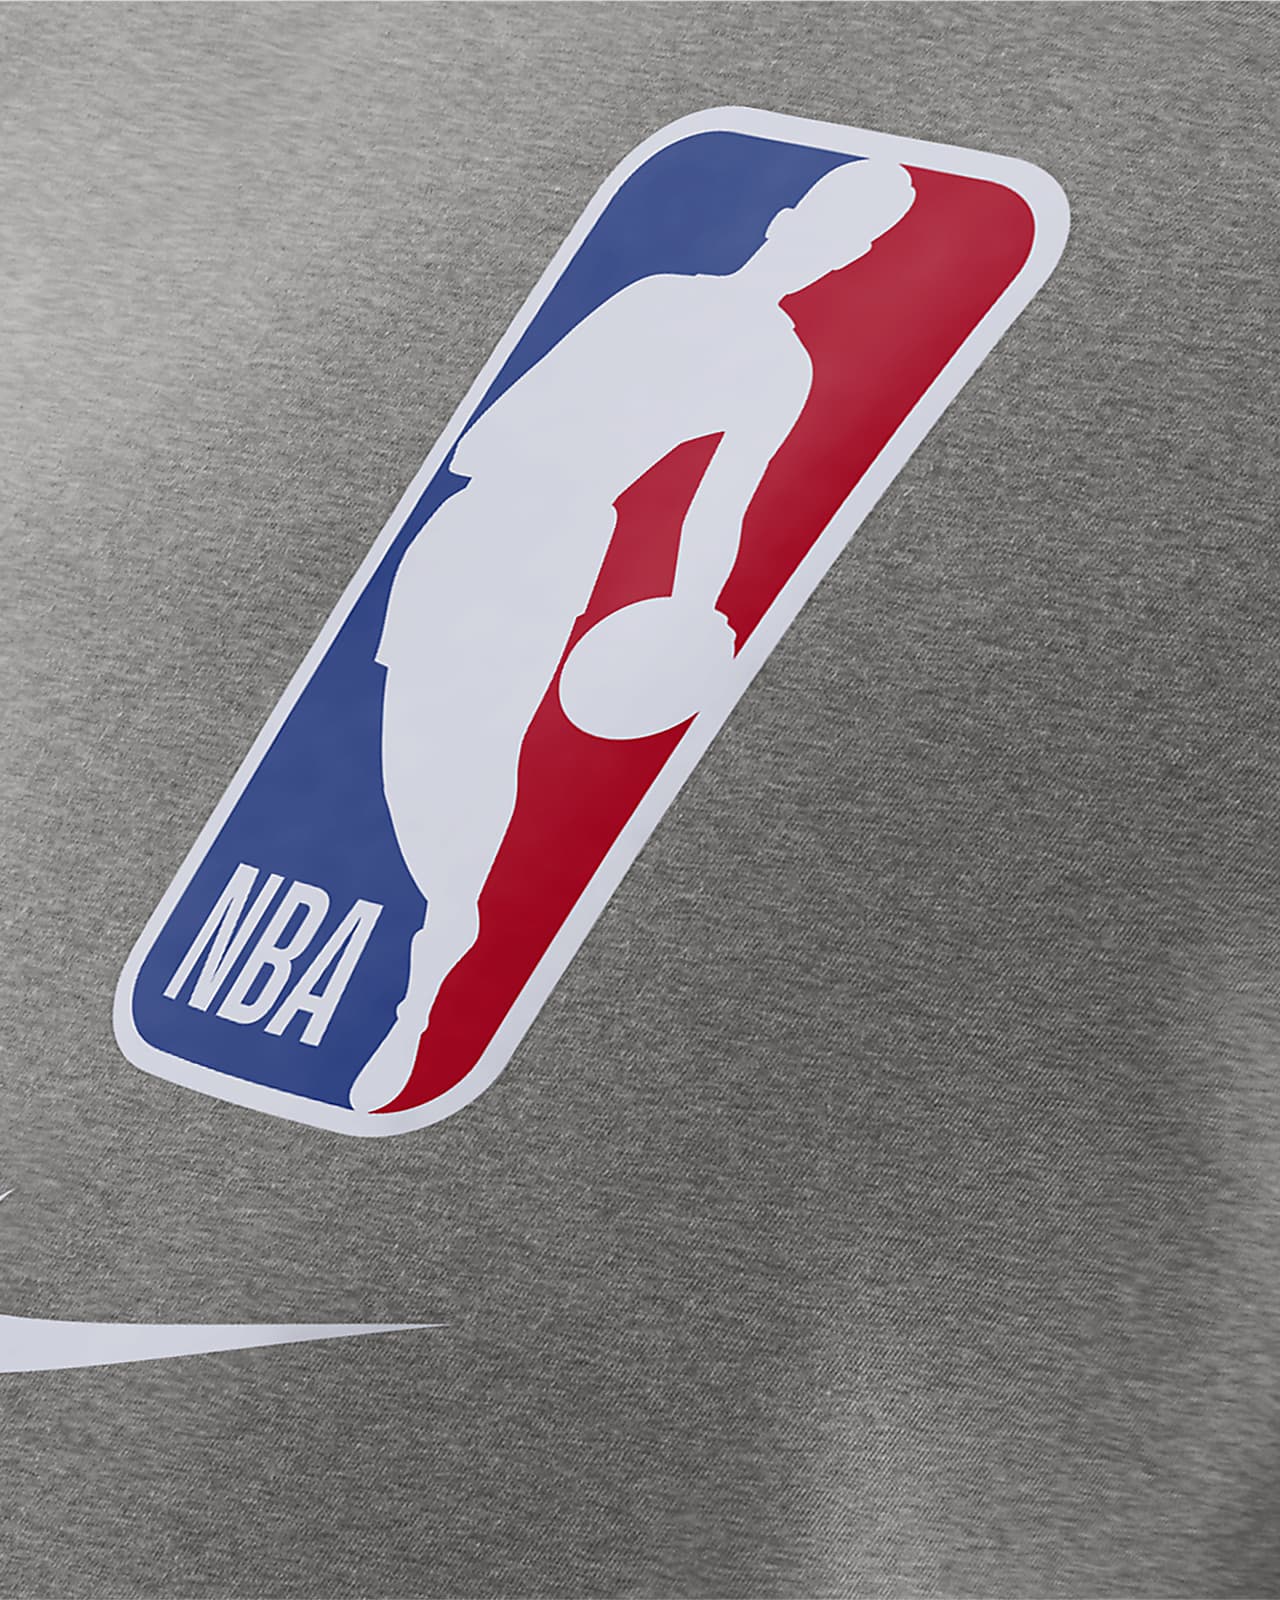 Nike NBA Team 31 NBA T-shirt- Basketball Store